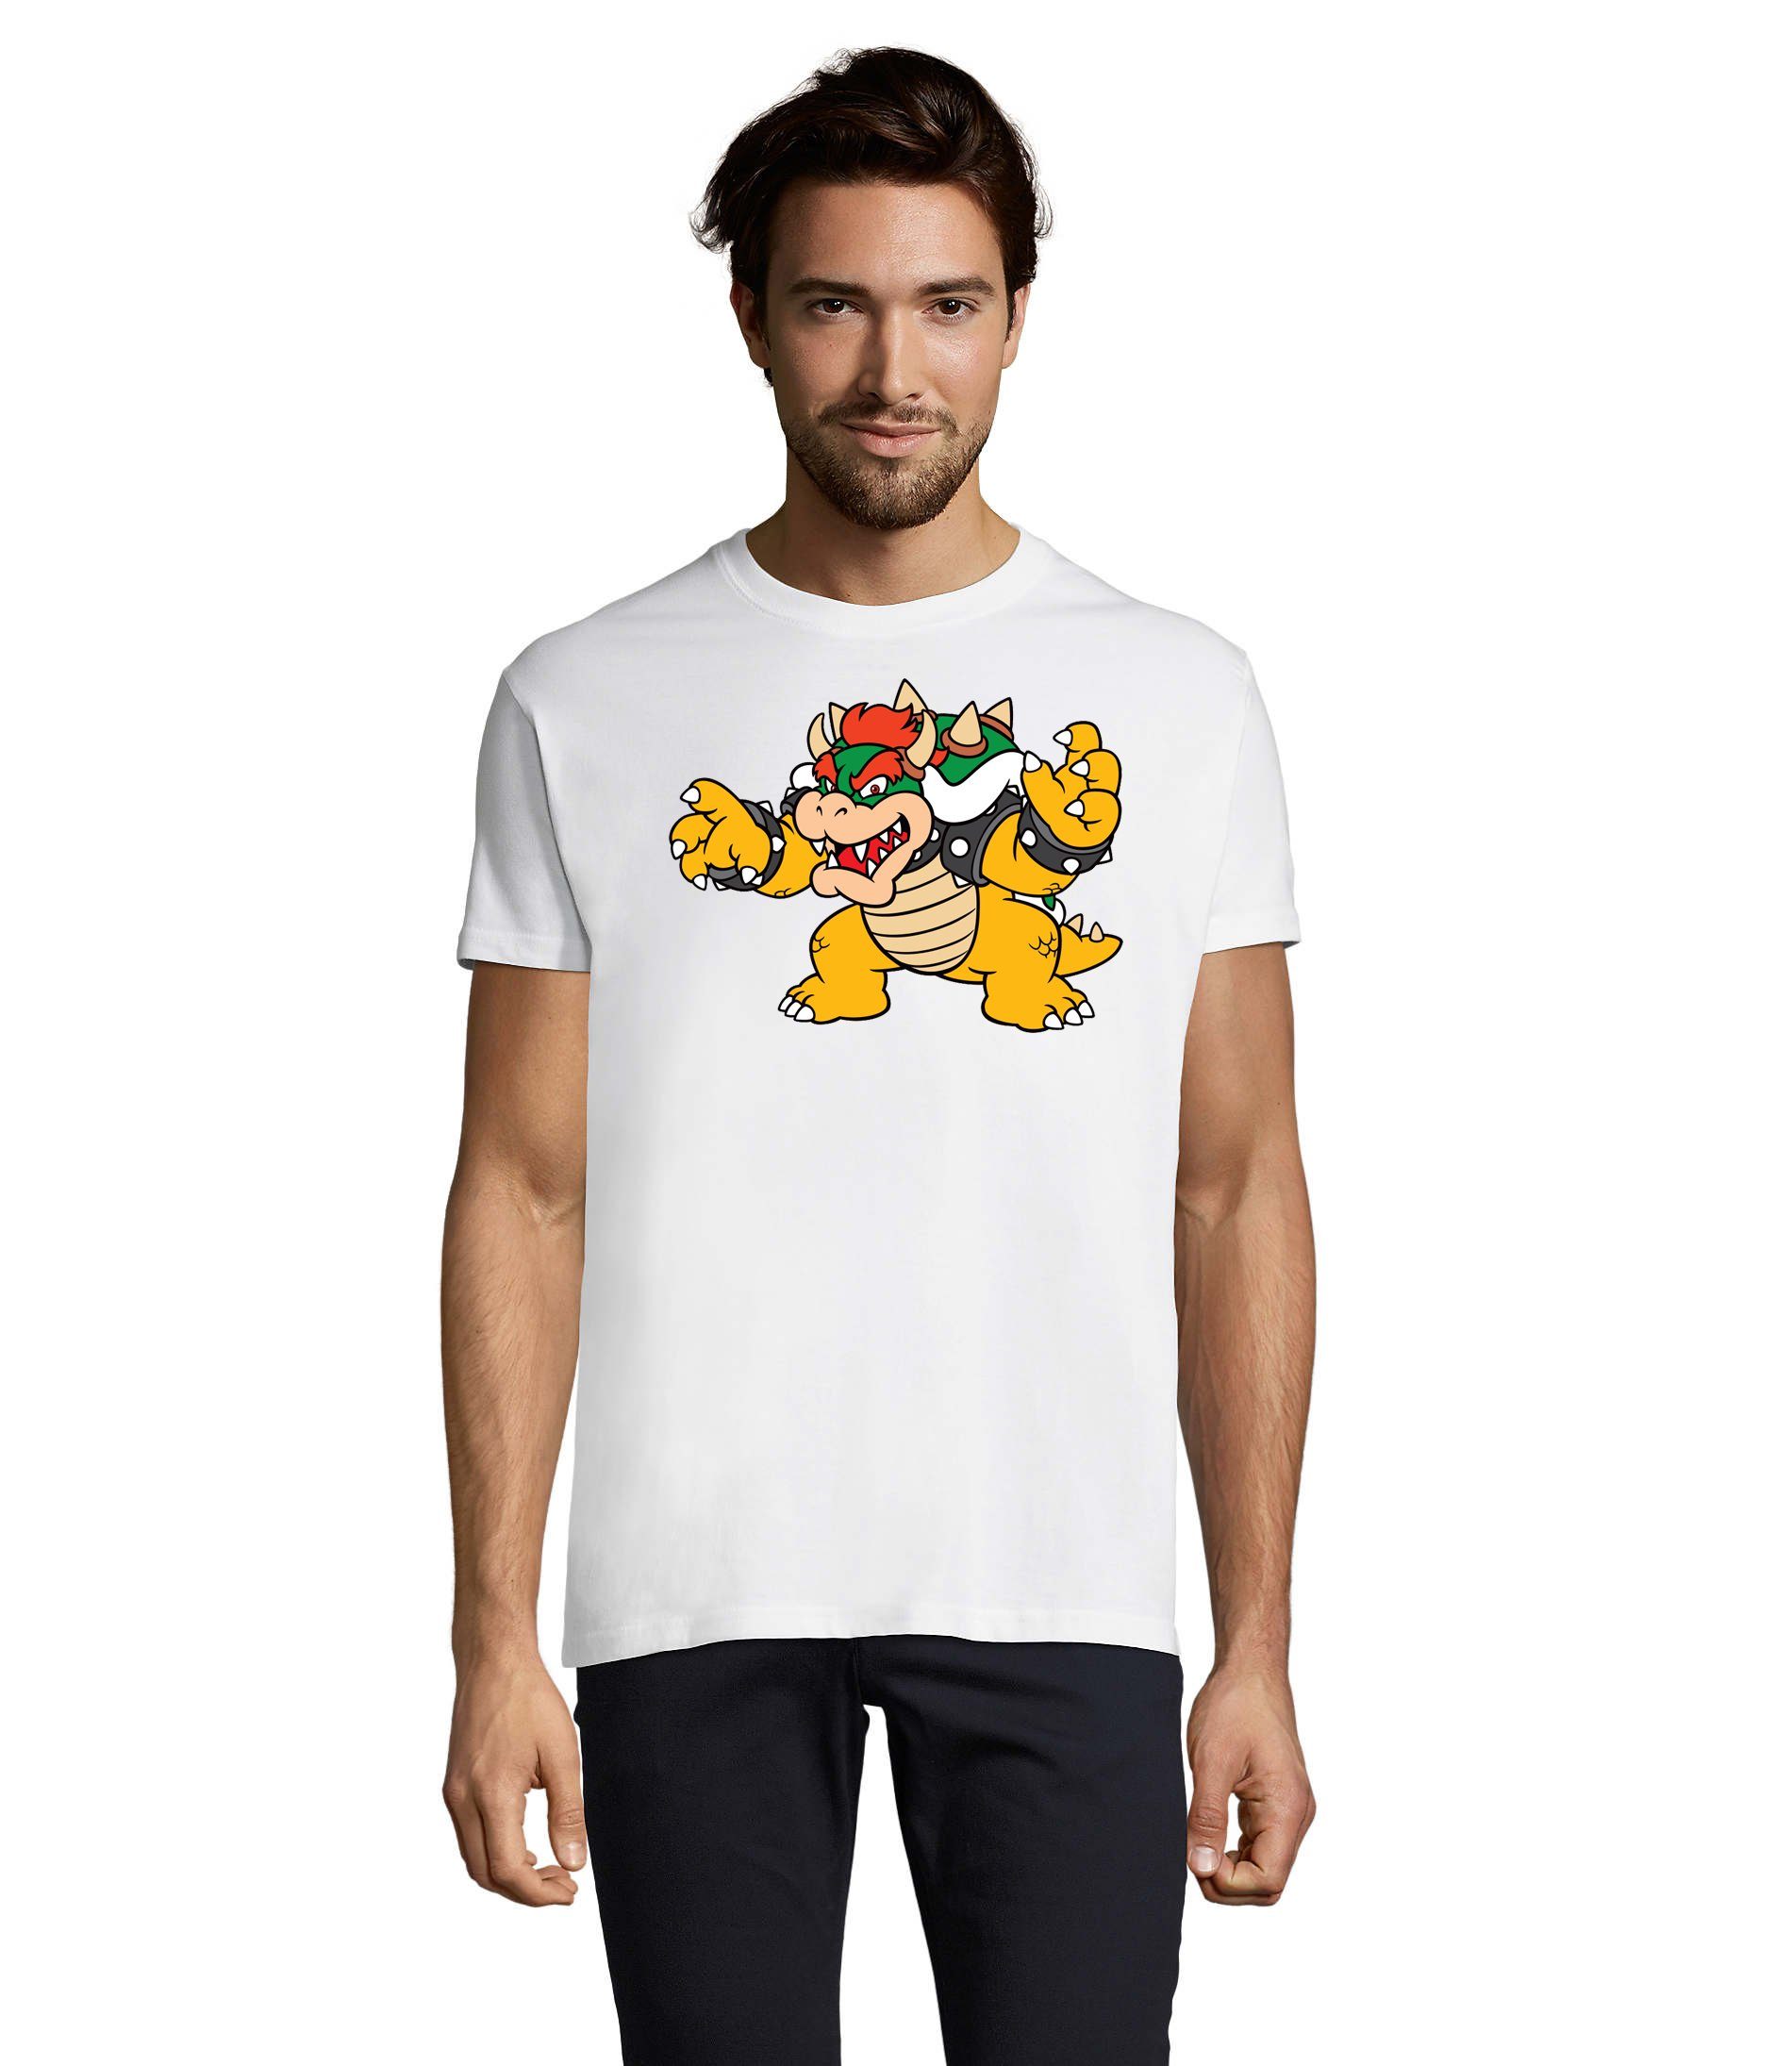 Blondie & Brownie T-Shirt Herren Nintendo Mario Yoshi Luigi Game Gamer Gaming Konsole Weiss